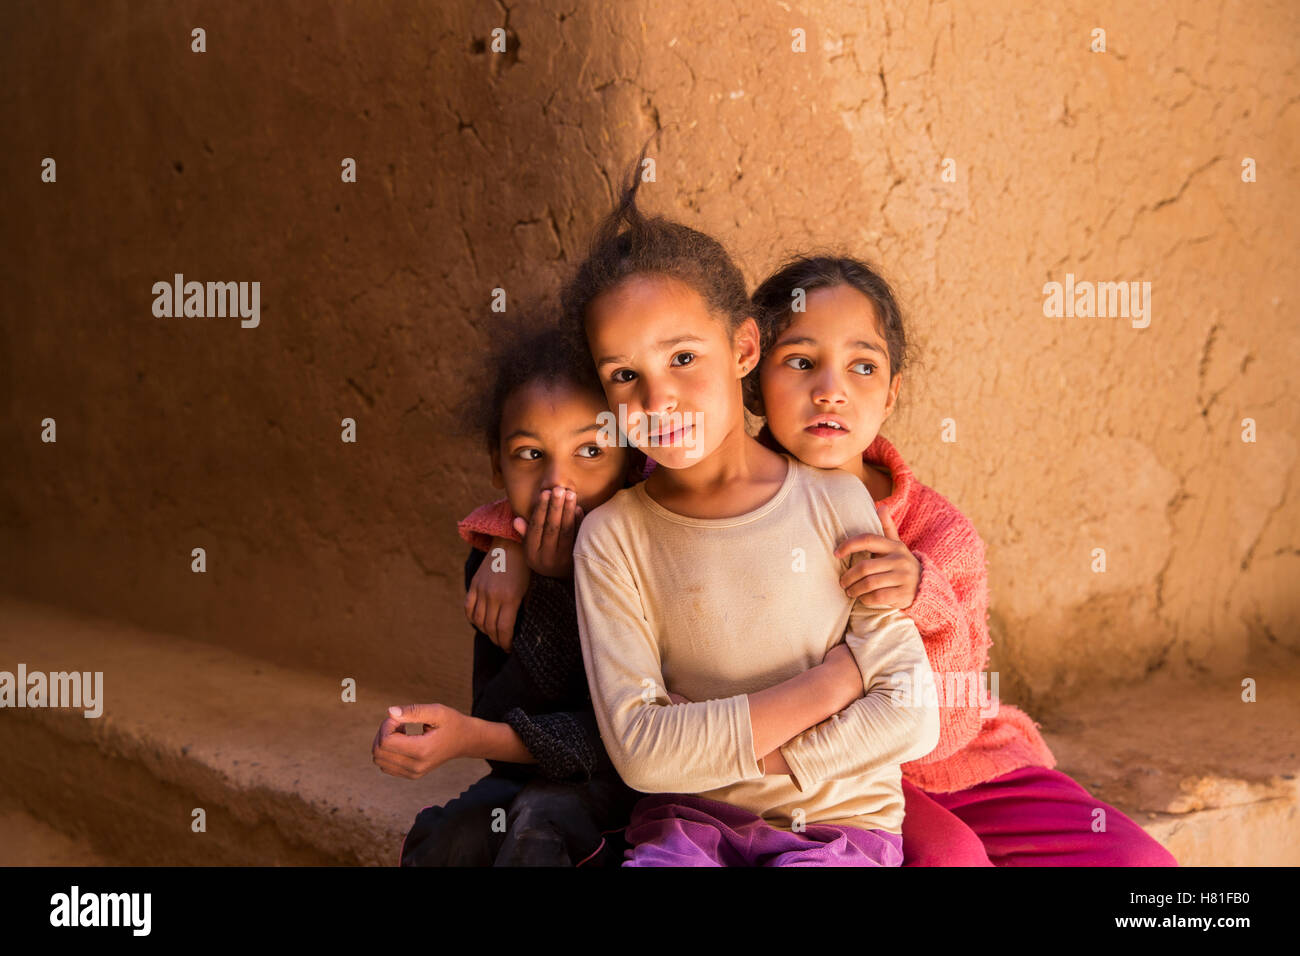 Morocco,Tinejdad,Todra Valley,Ksar El Khorbat, children posing Stock Photo